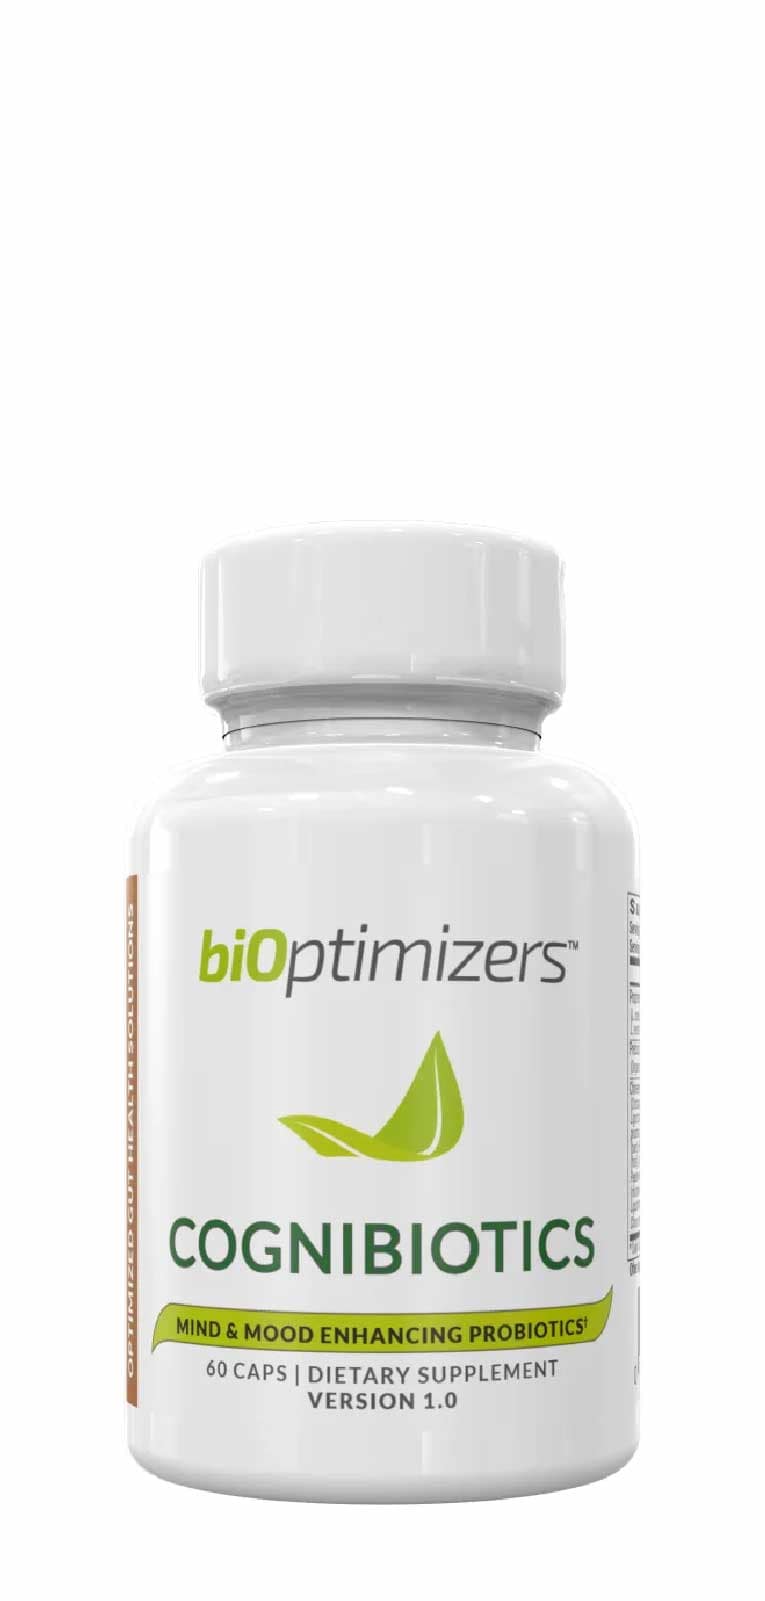 BiOptimizers Cognibiotics bei LiveHelfi kaufen